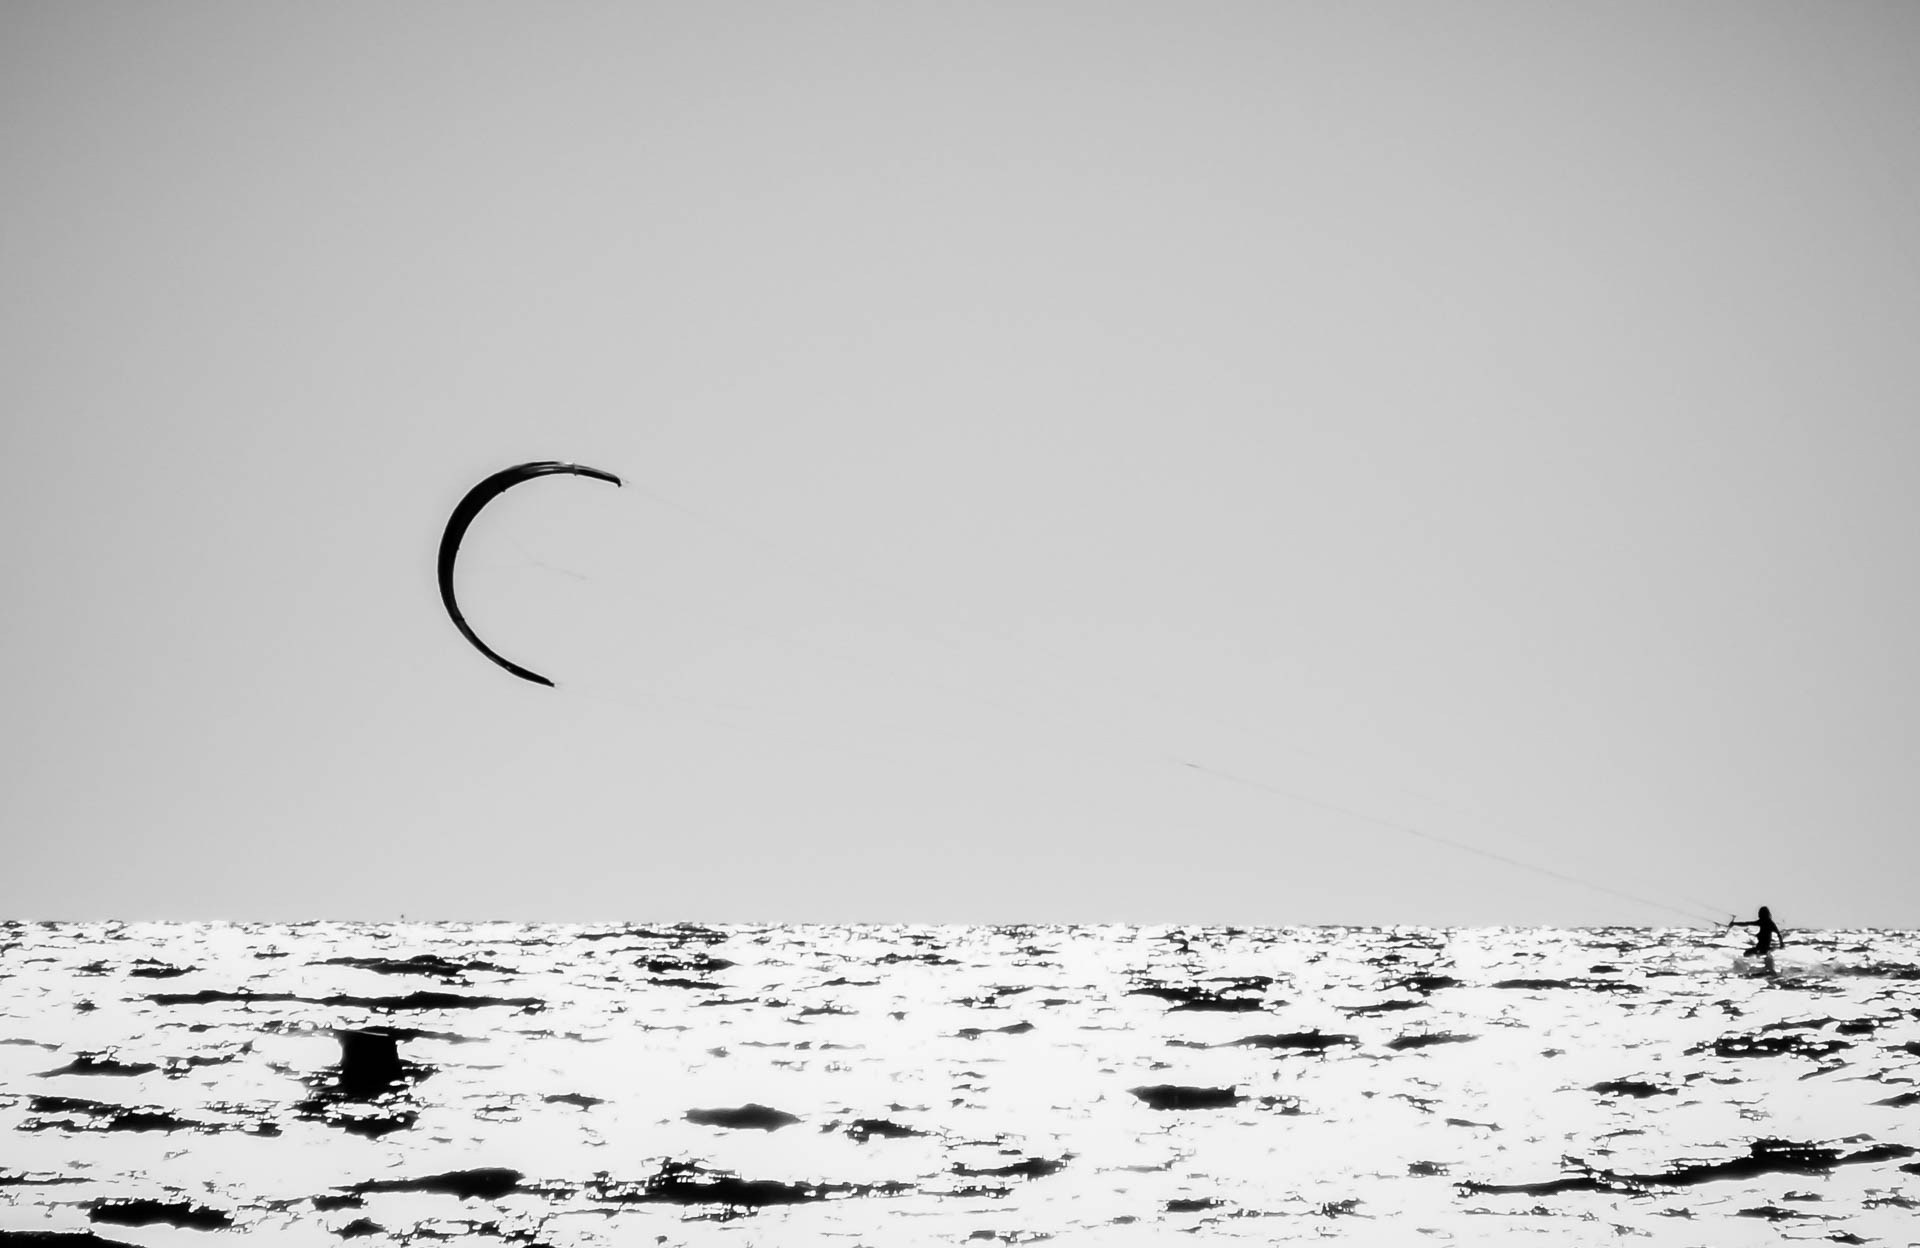 Kite-Surf – A freedom wish……